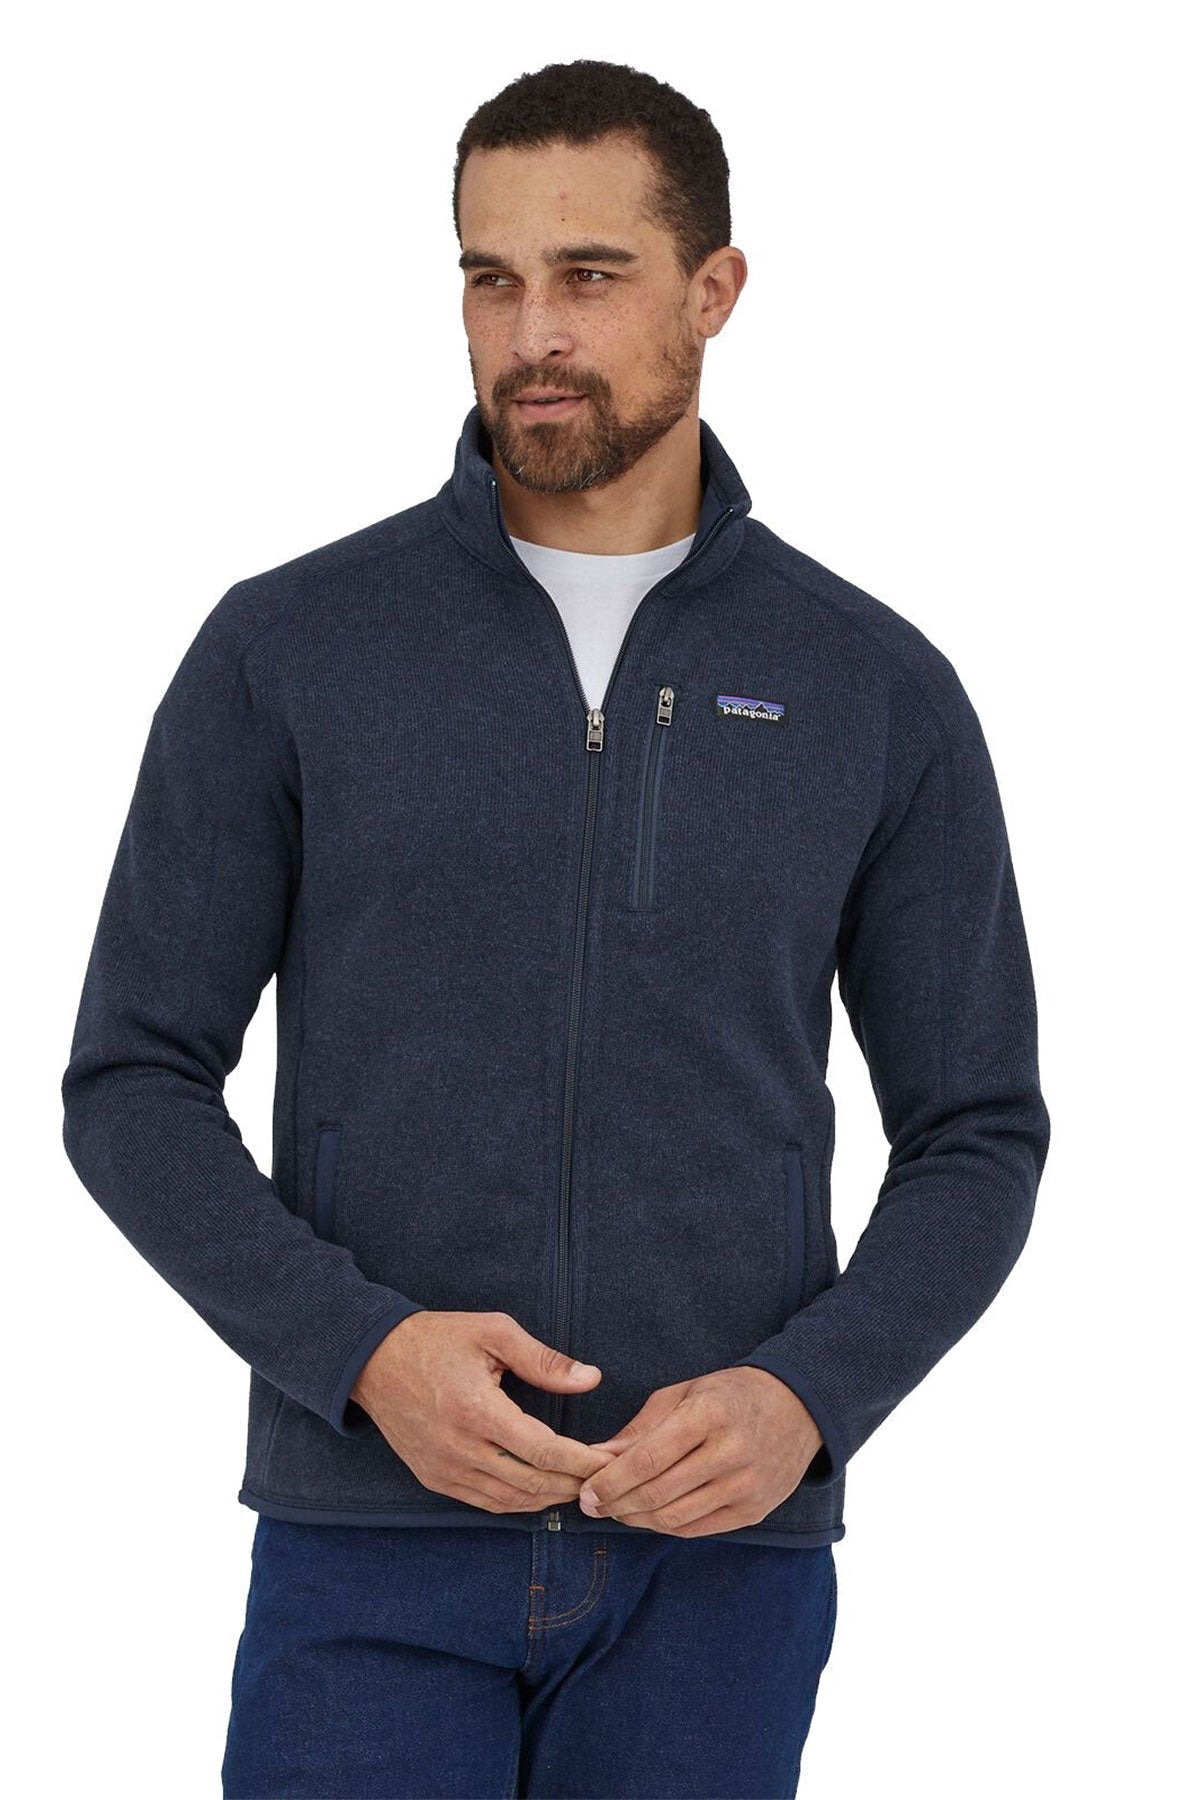 Womens PATAGONIA Teal 1/4 Zip Better Sweater Fleece Jacket Medium 